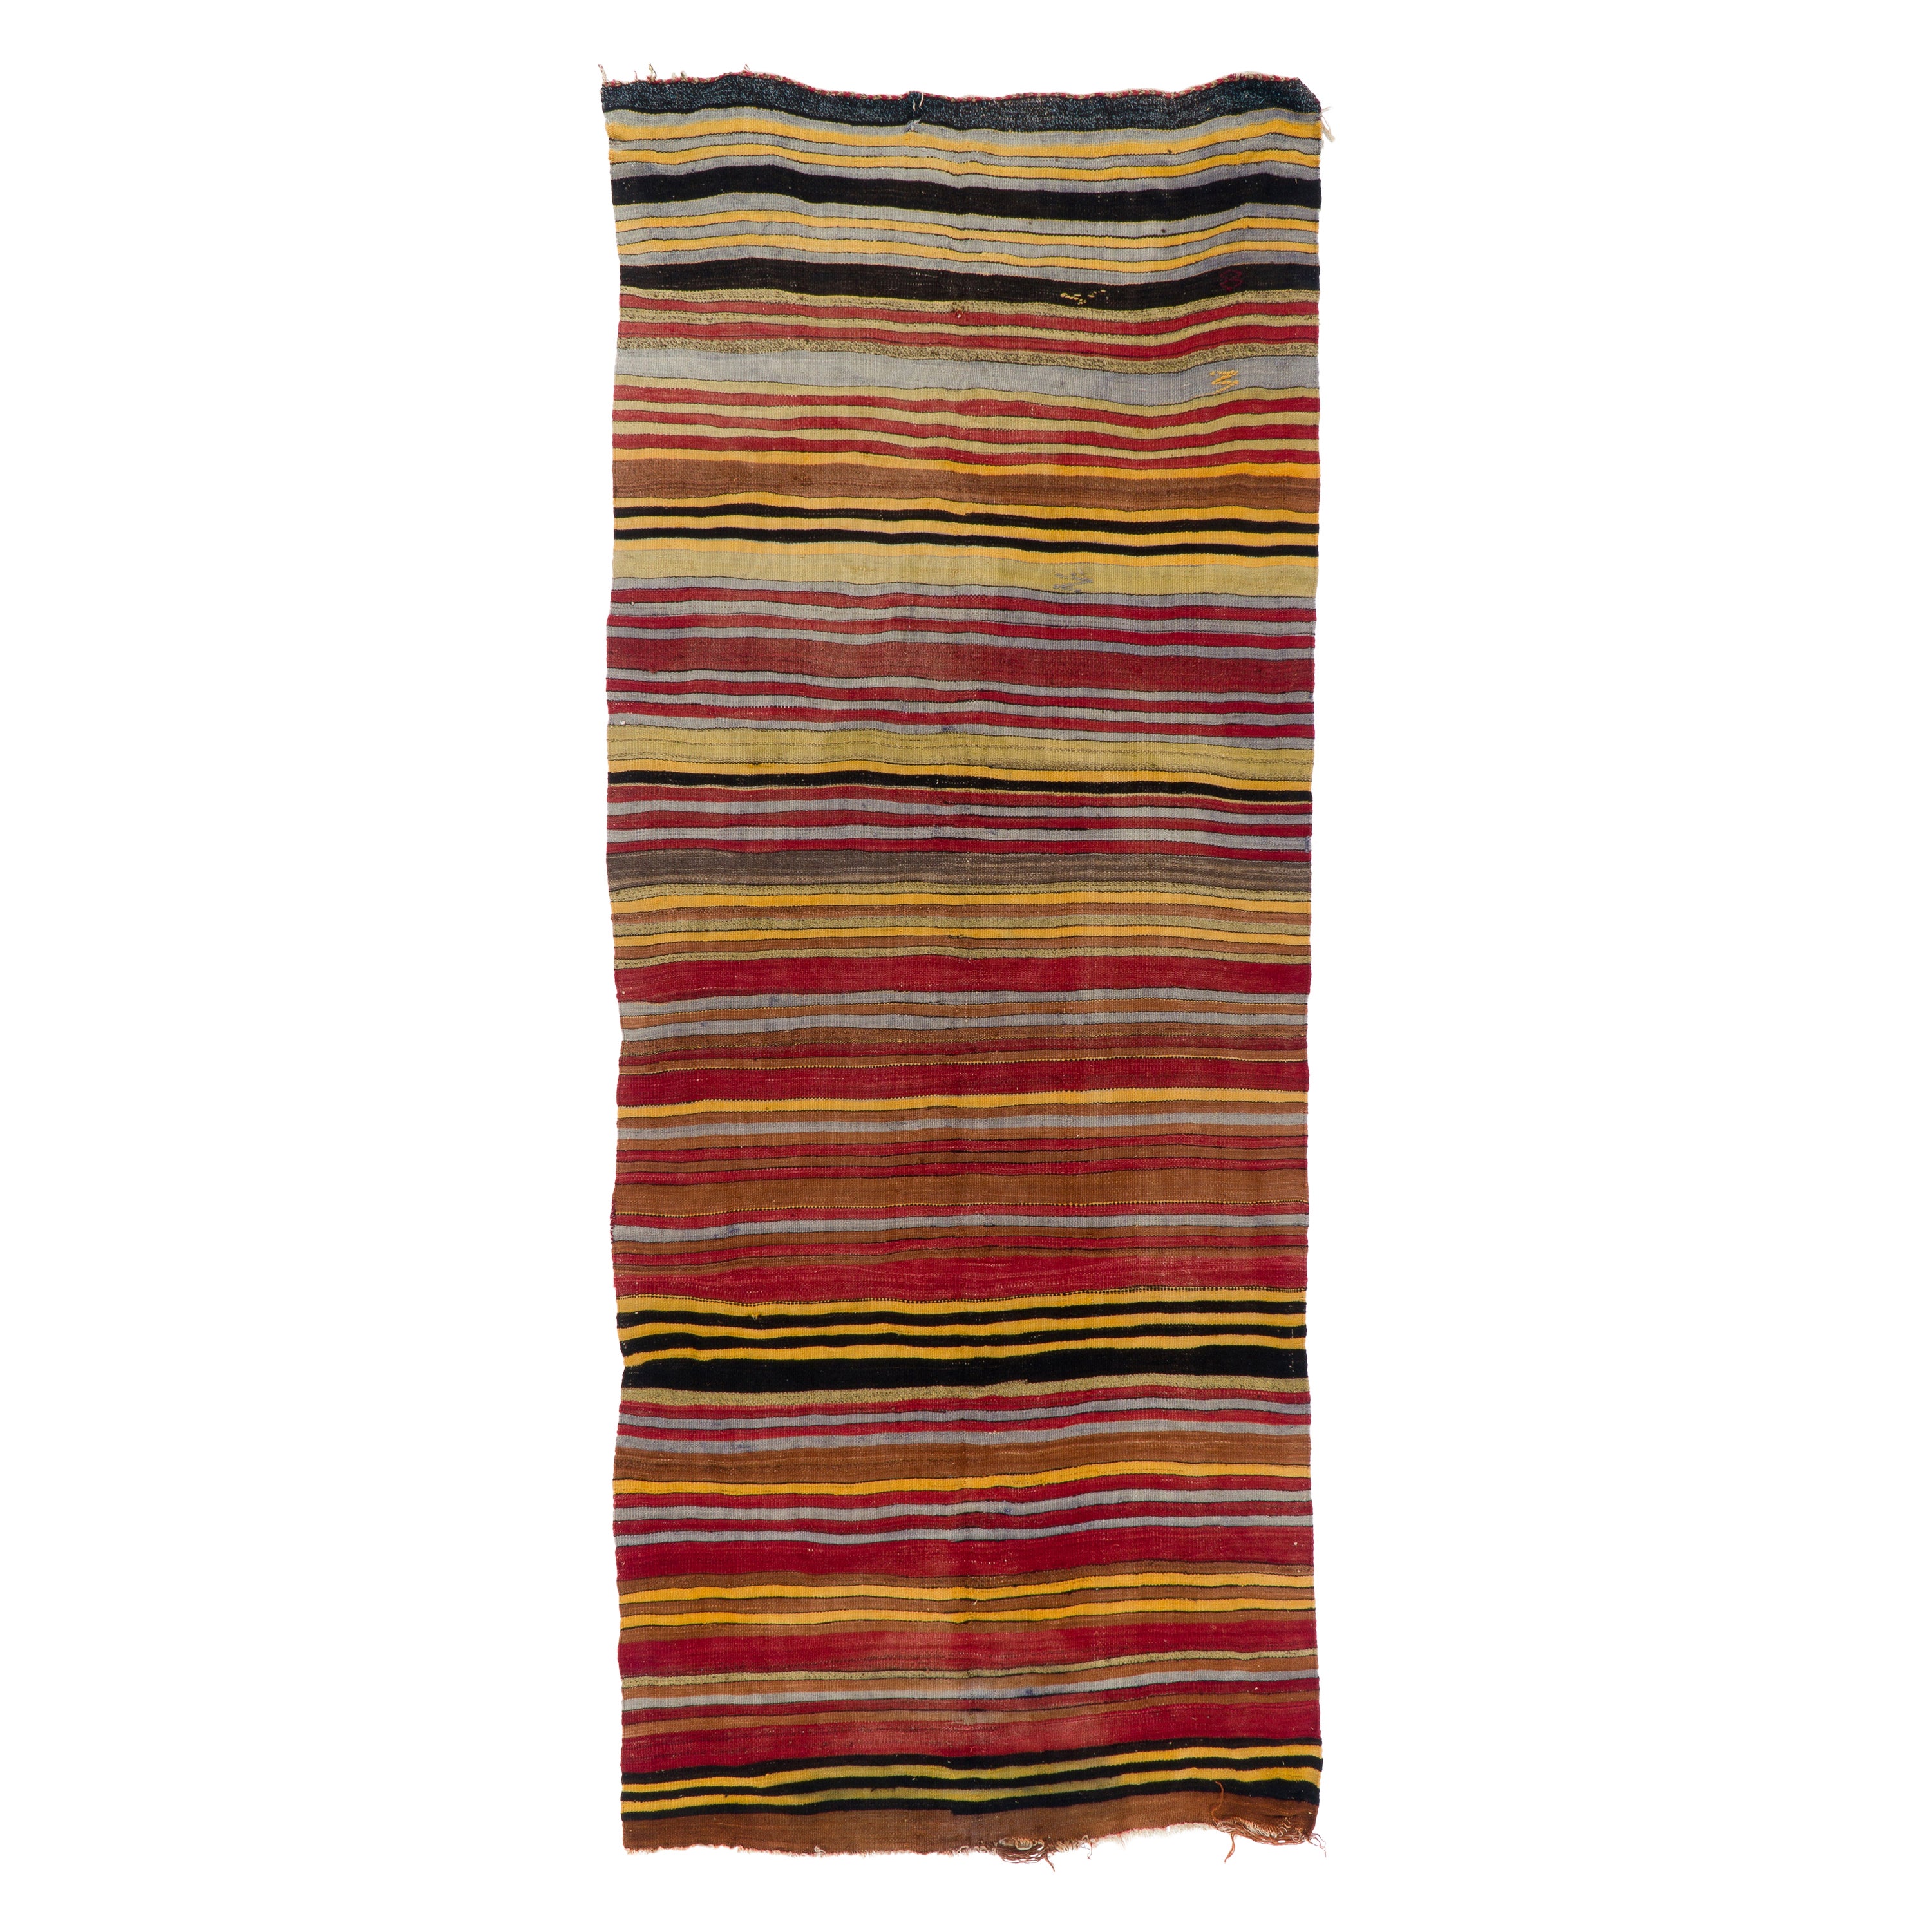 4.6x11.2 Ft Colorful Vintage Striped Handwoven Turkish Kilim 'Flat Weave' For Sale